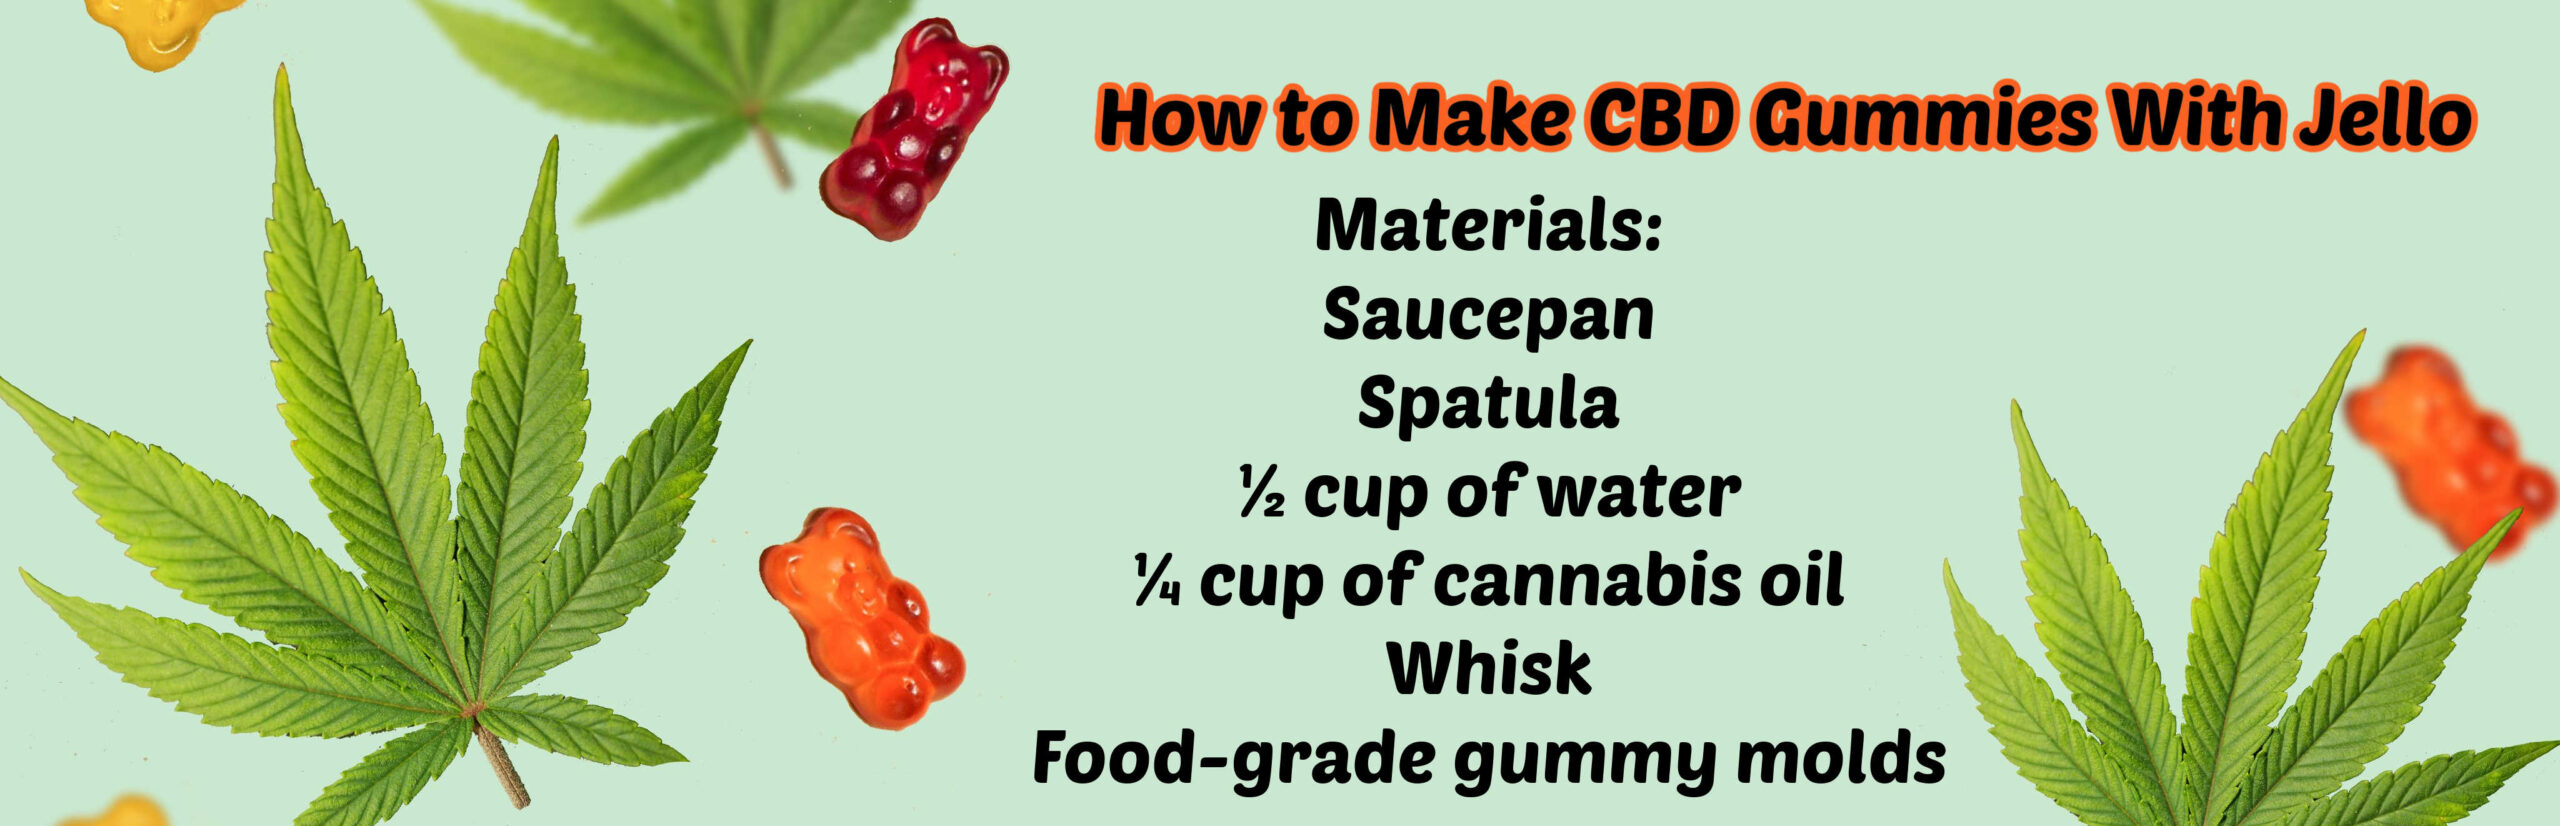 image of materials to make cbd gummies with jello